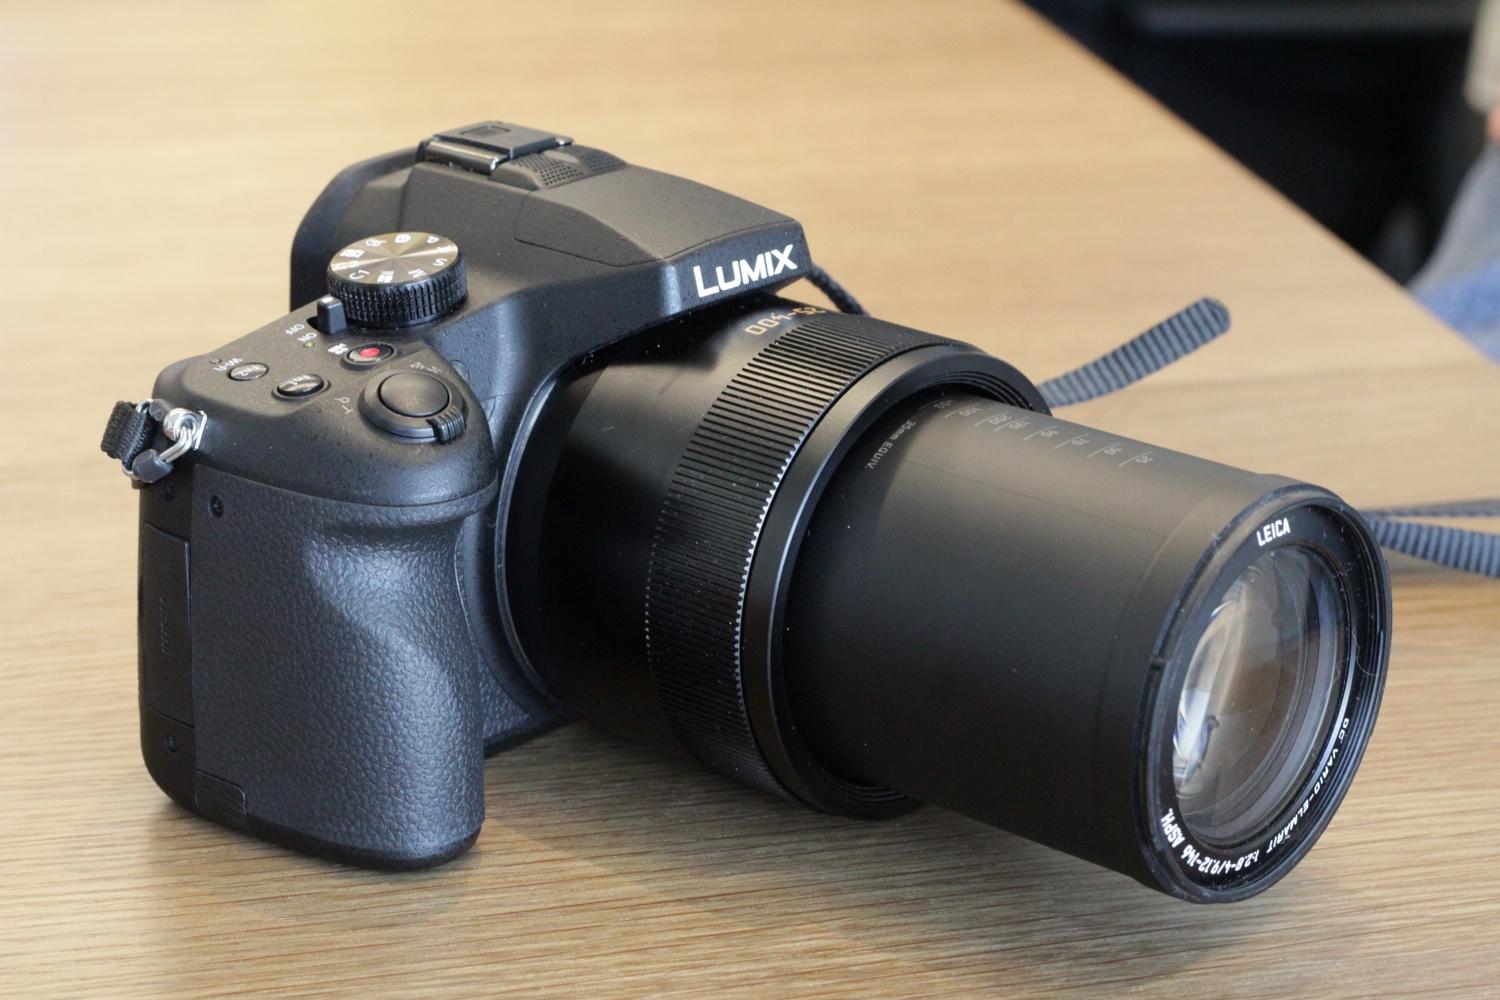 panasonic introduces 4k capable lumix fz1000 bridge camera img 1298